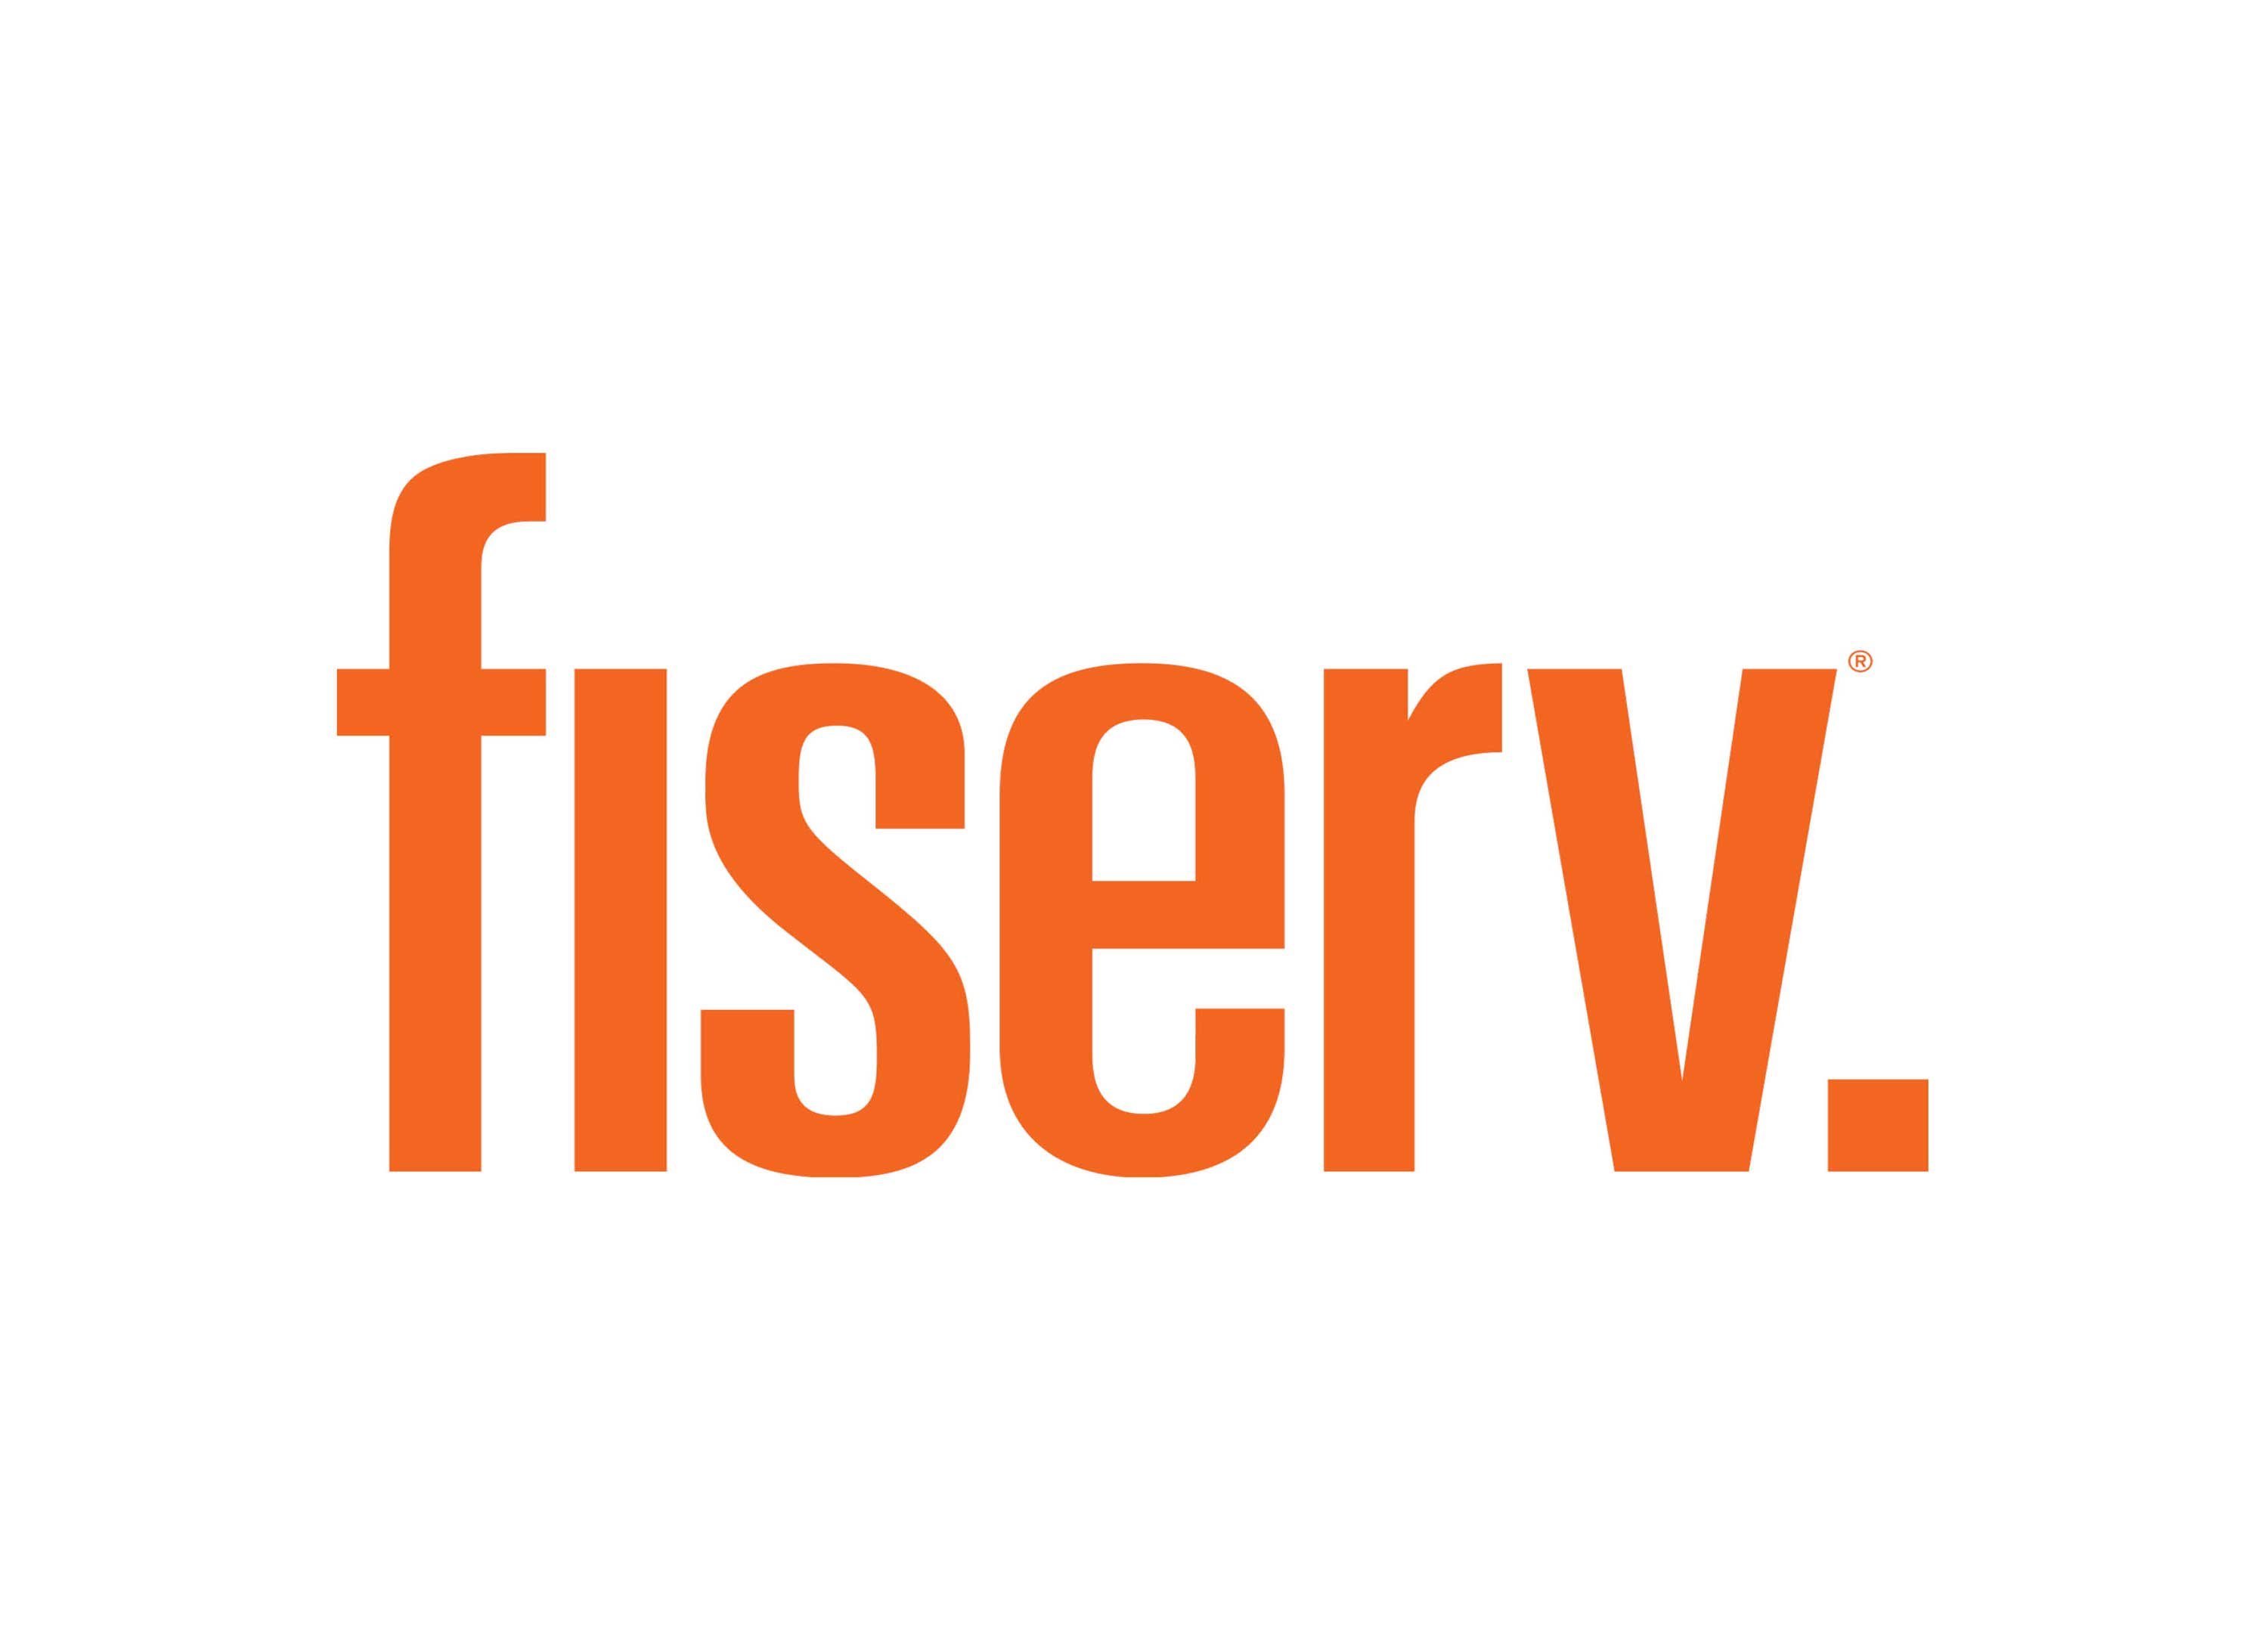 Fiserv2